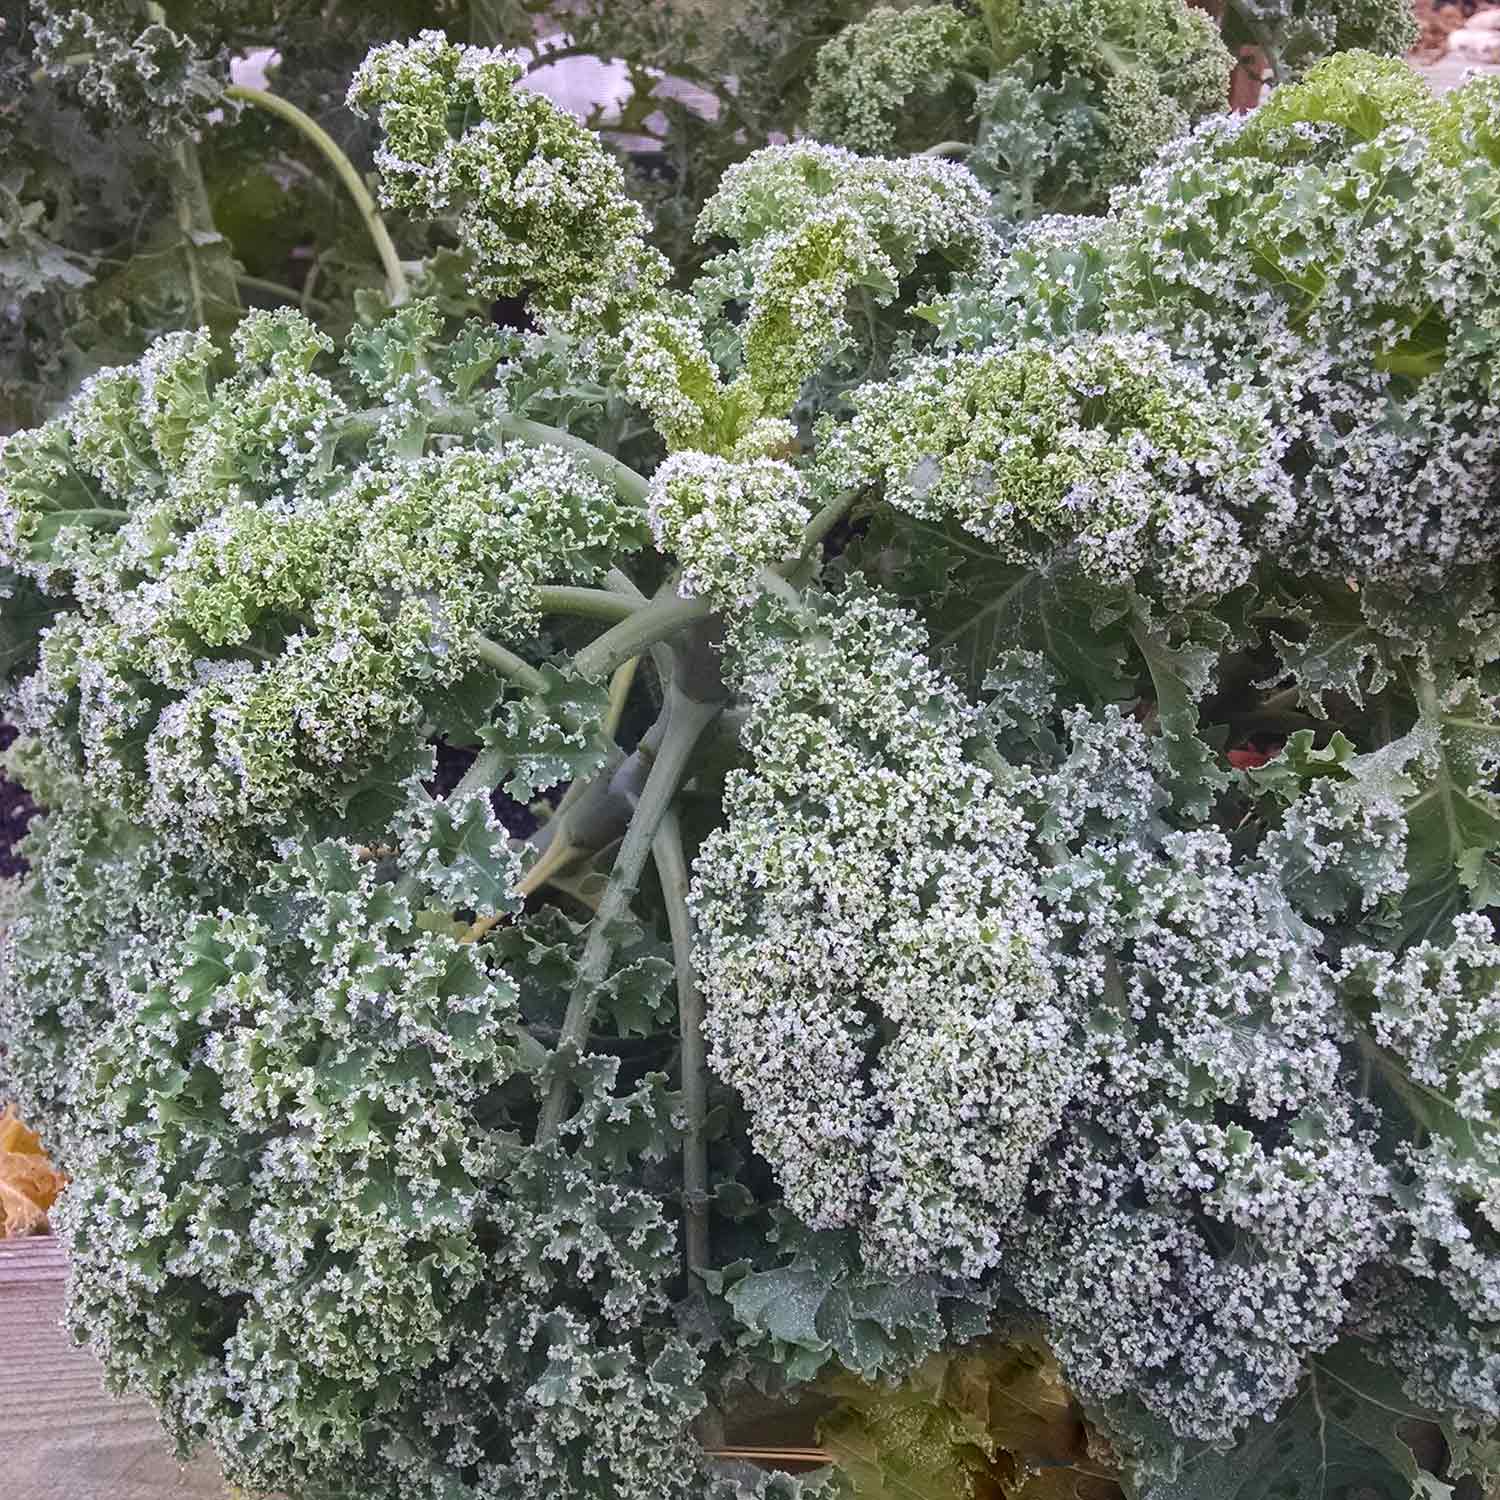 A heavy frost on kale leaves.